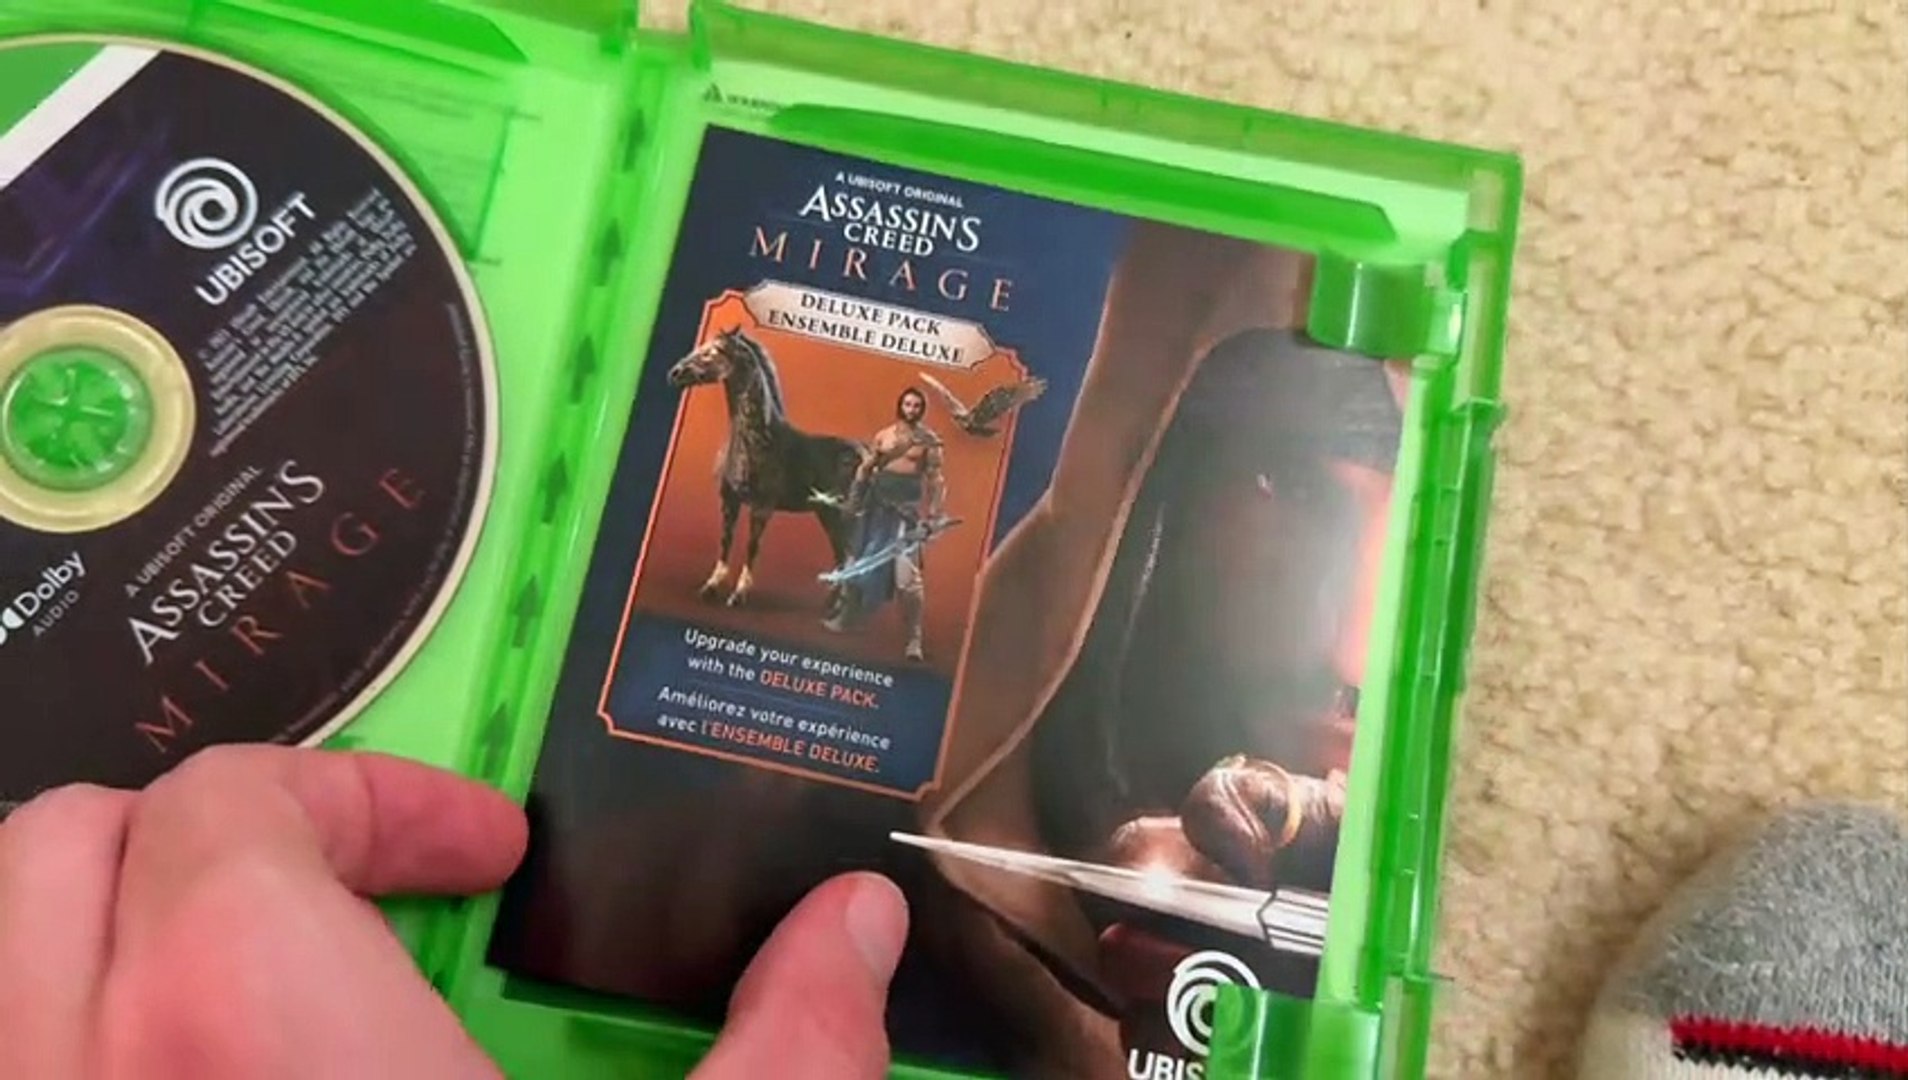 Assassins' Creed Mirage - Xbox Series X 